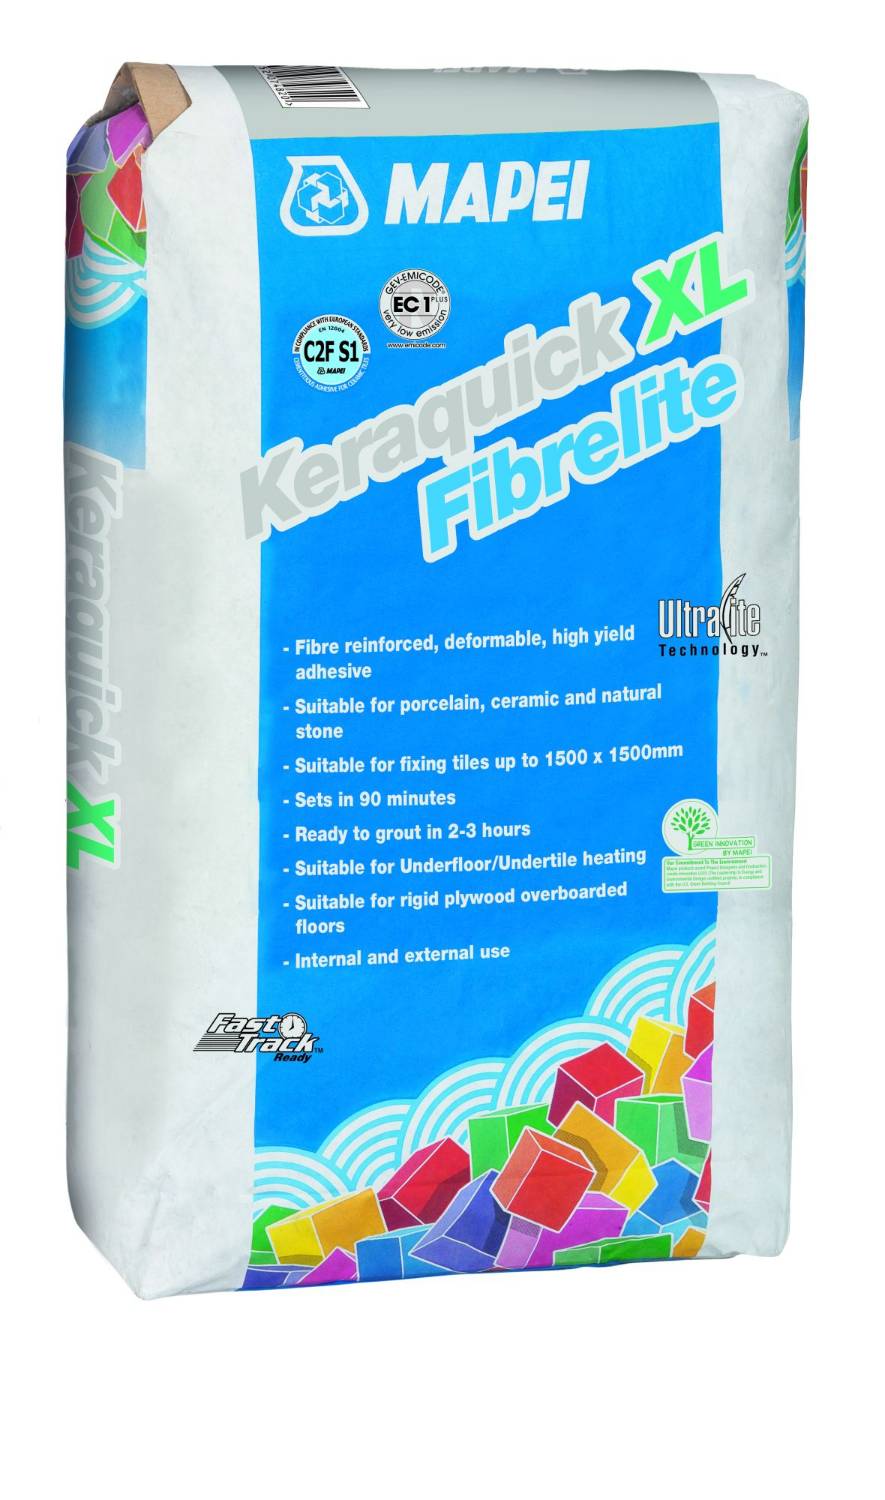 Keraquick XL Fibrelite - Tile adhesive